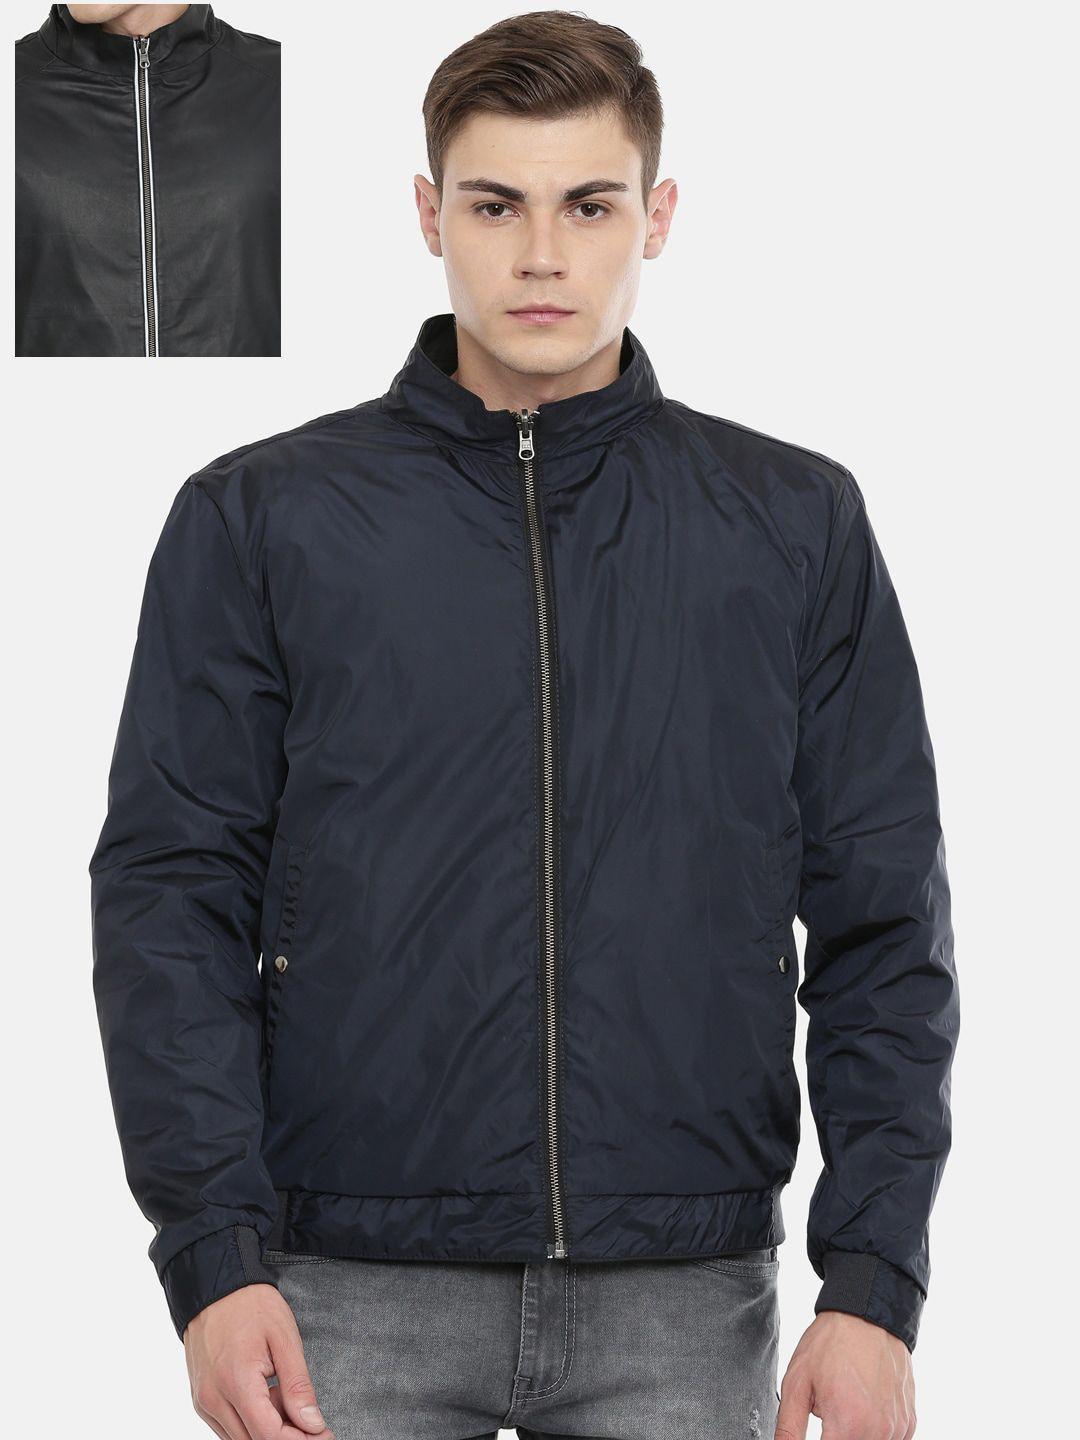 monochrome men black & navy blue reversible leather bomber jacket